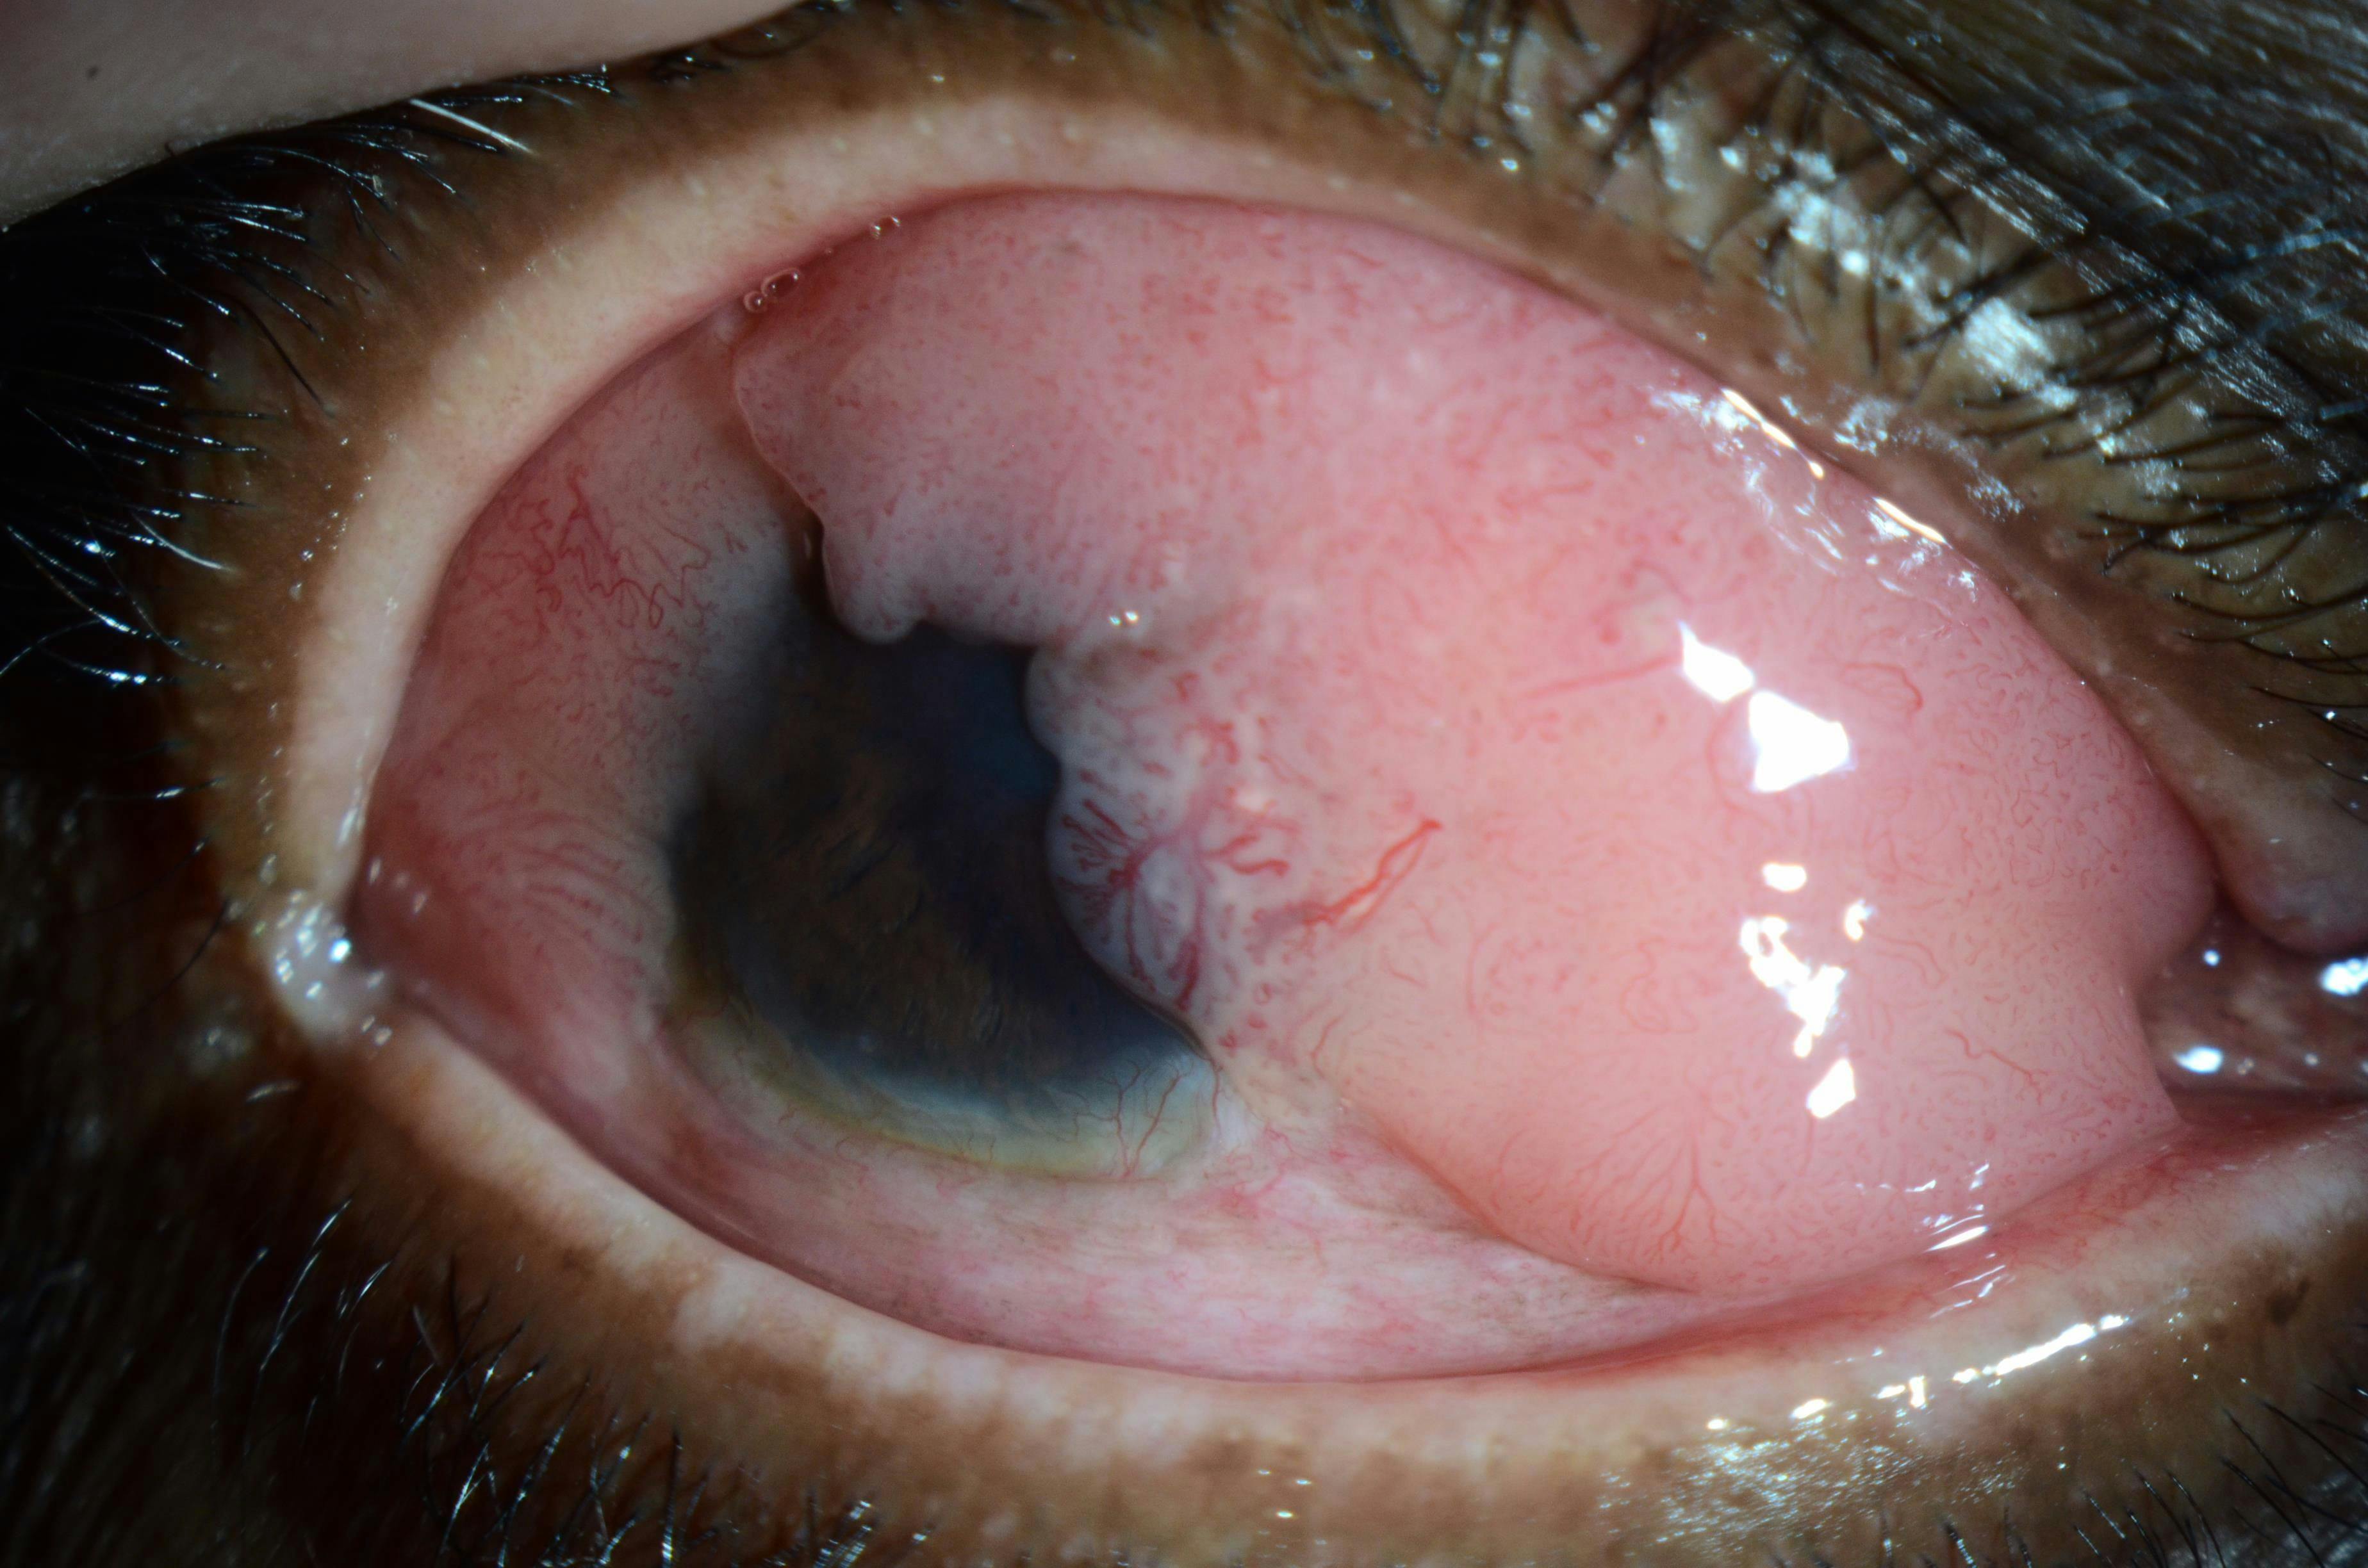 Rare ocular surface tumors often prove deadly